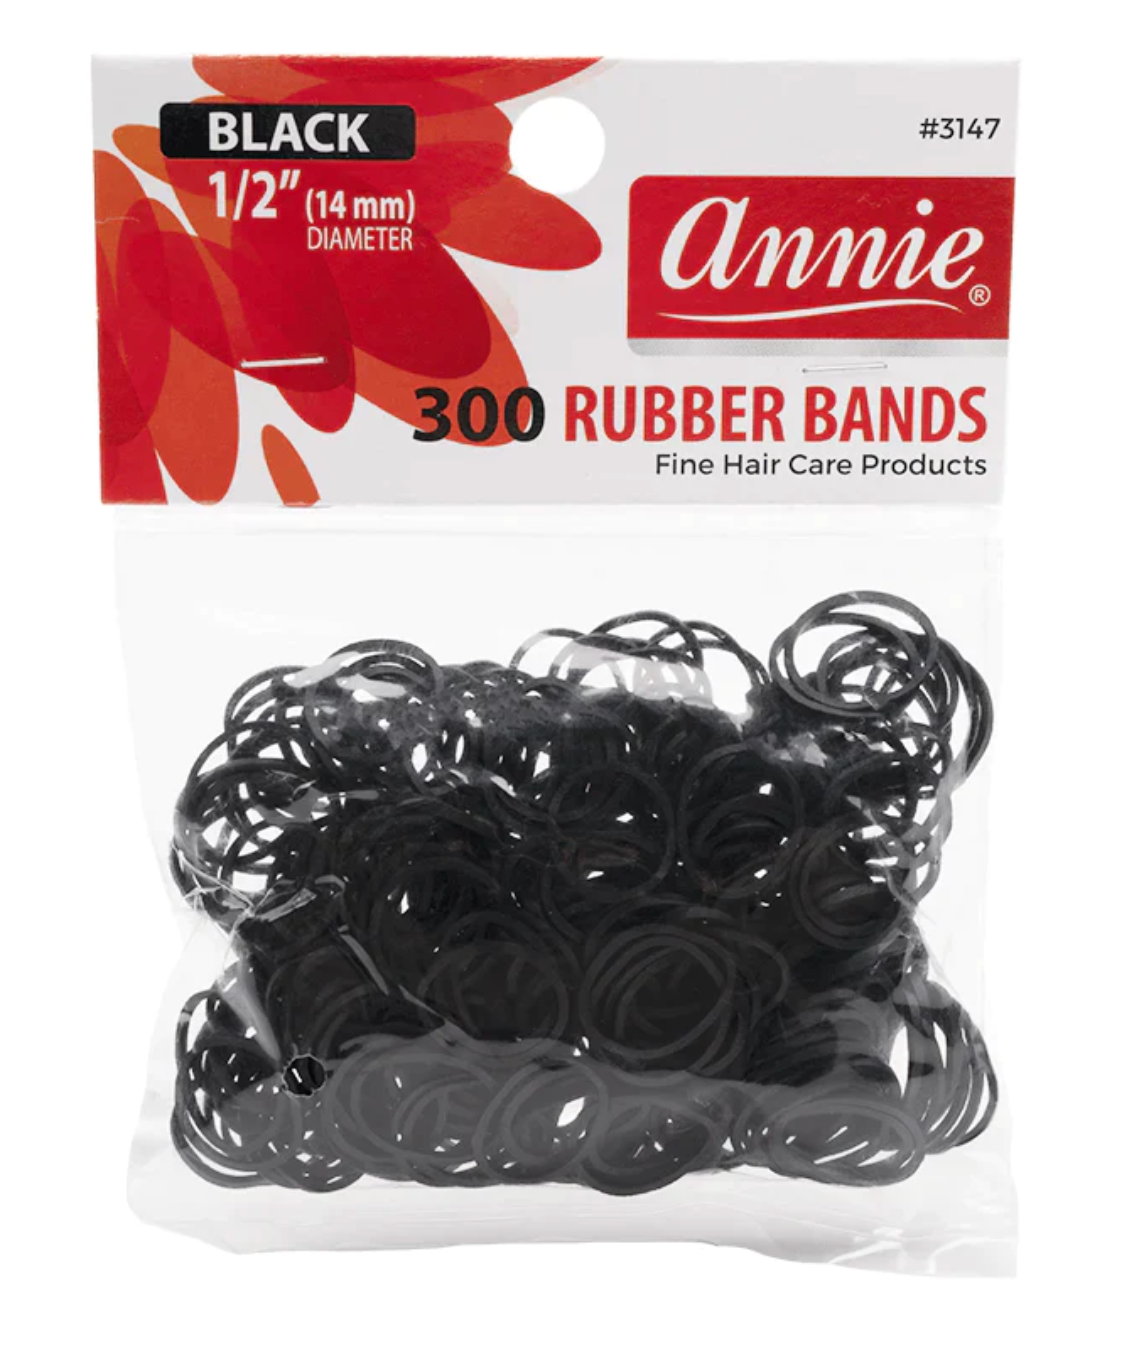 Annie Rubber Bands Black 300ct